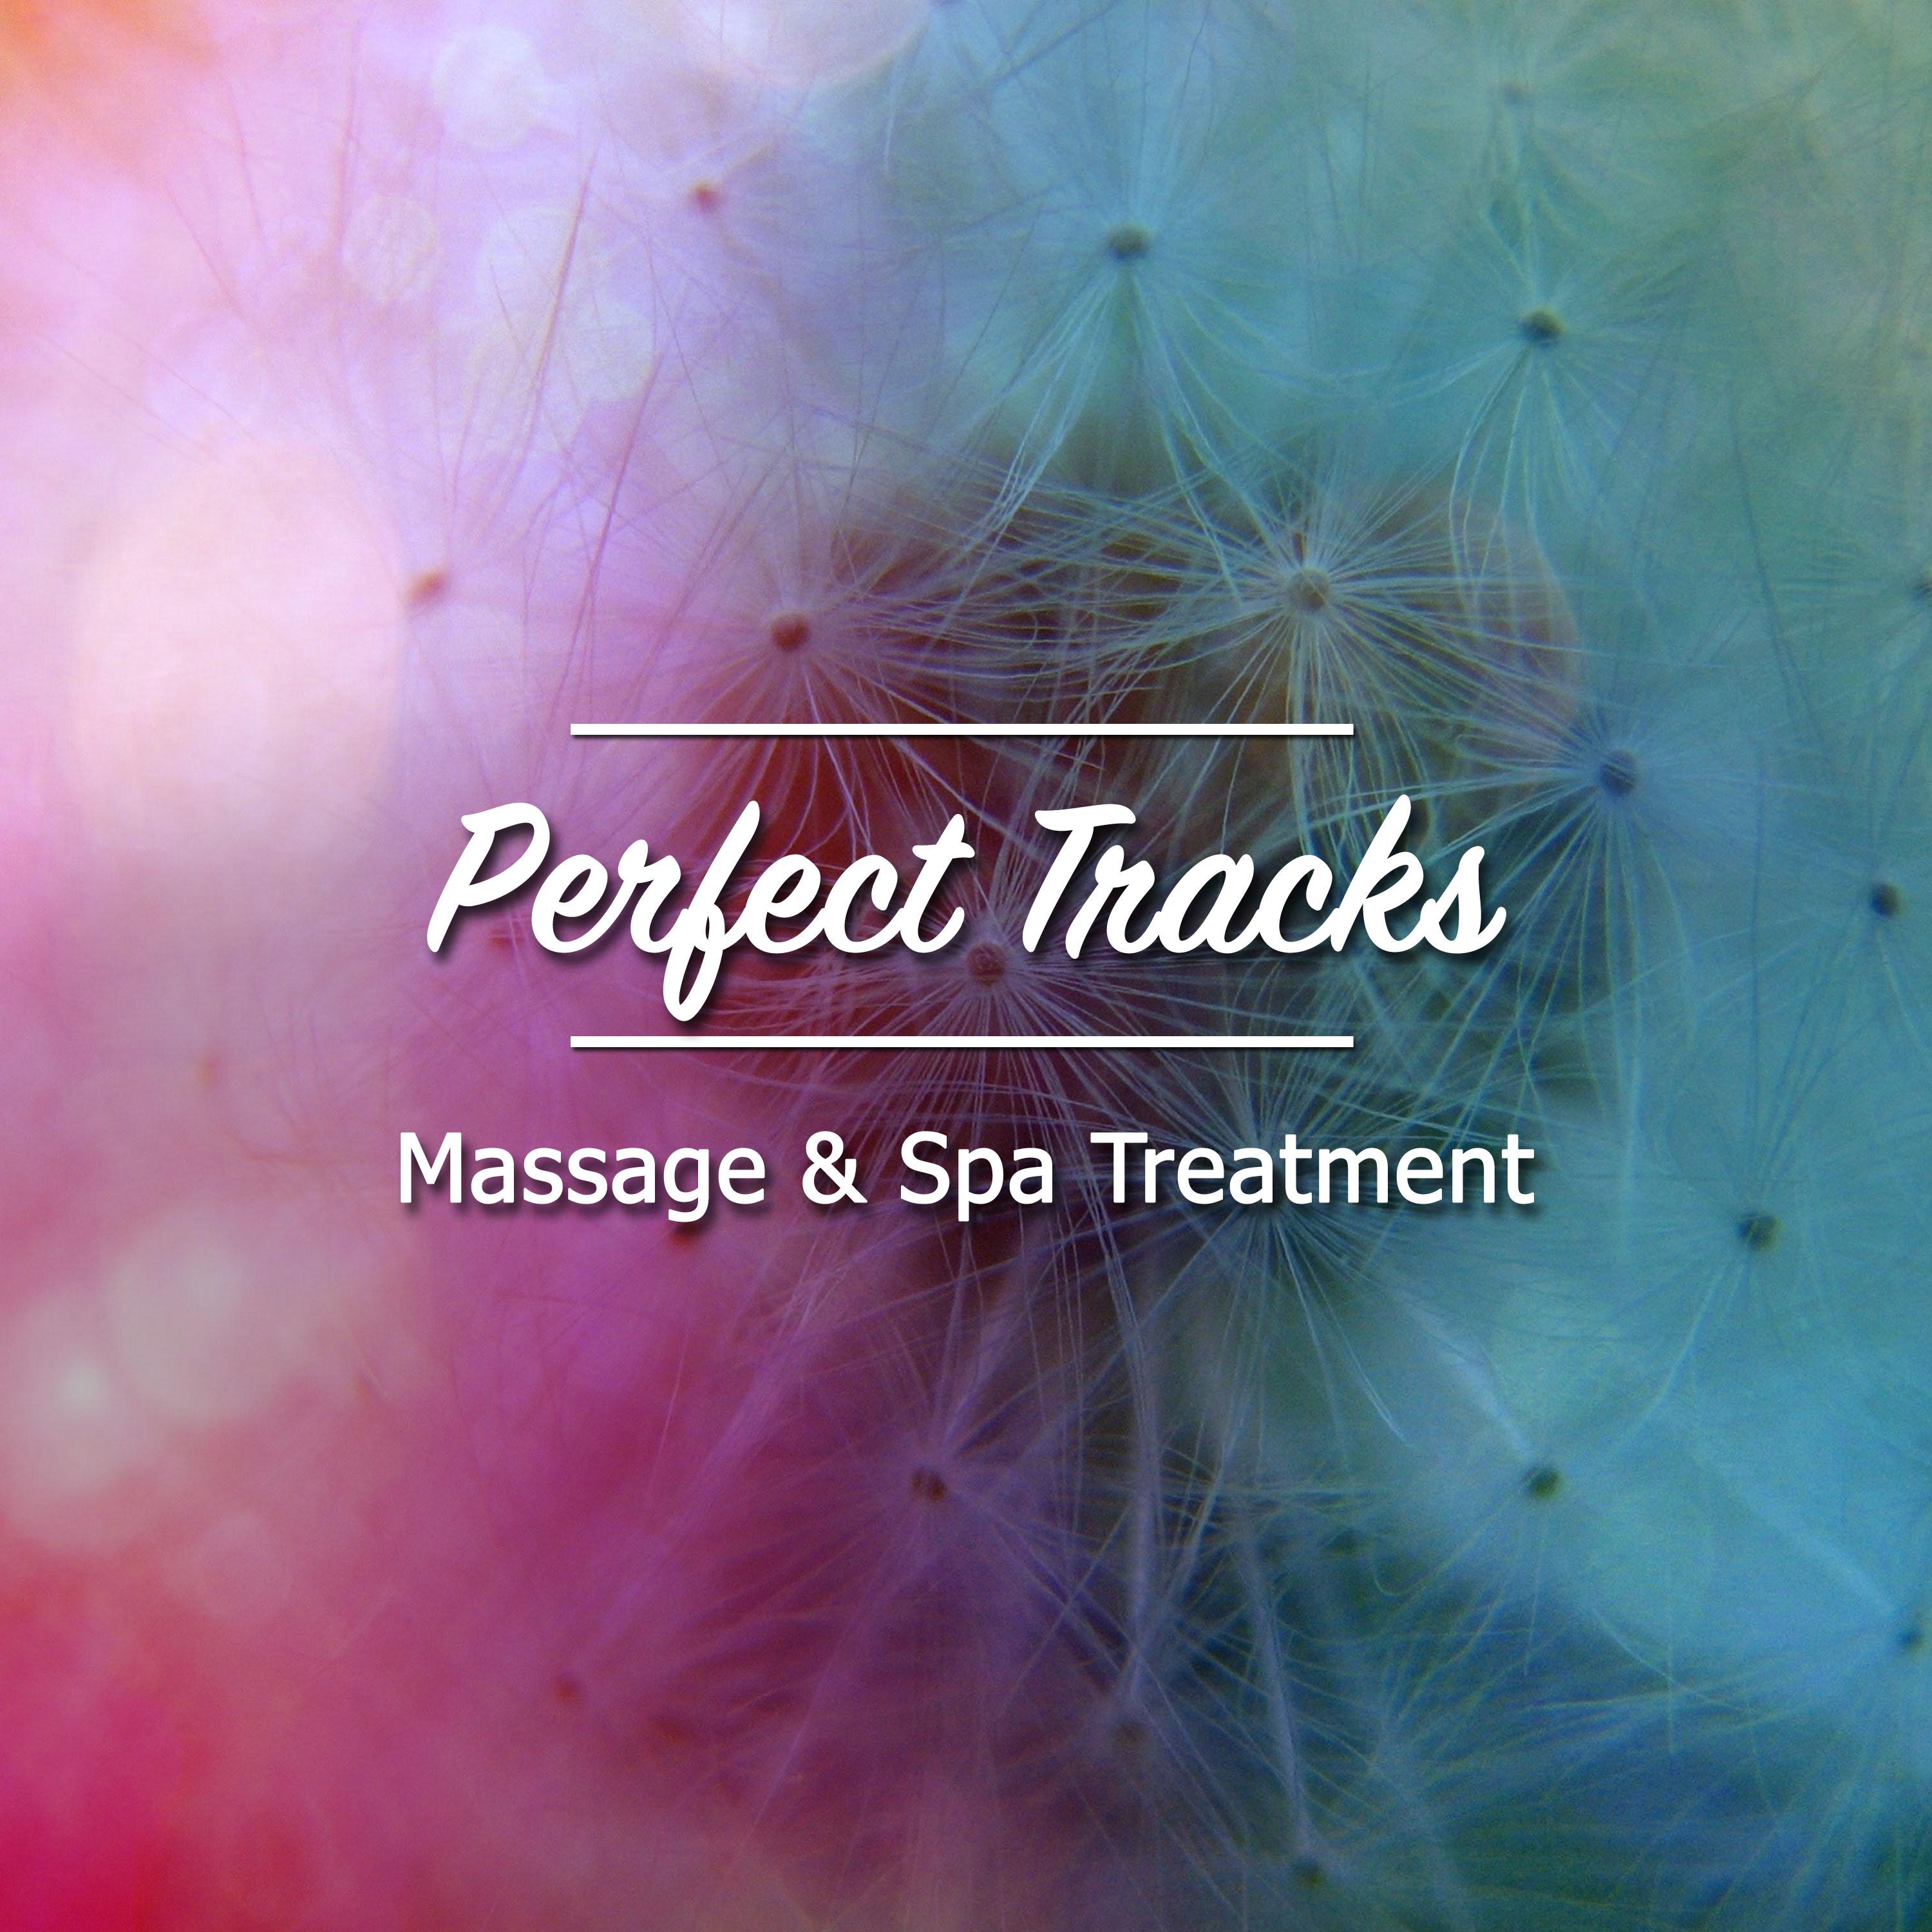 14 Tracks Perfect for Massage & Spa Treatment